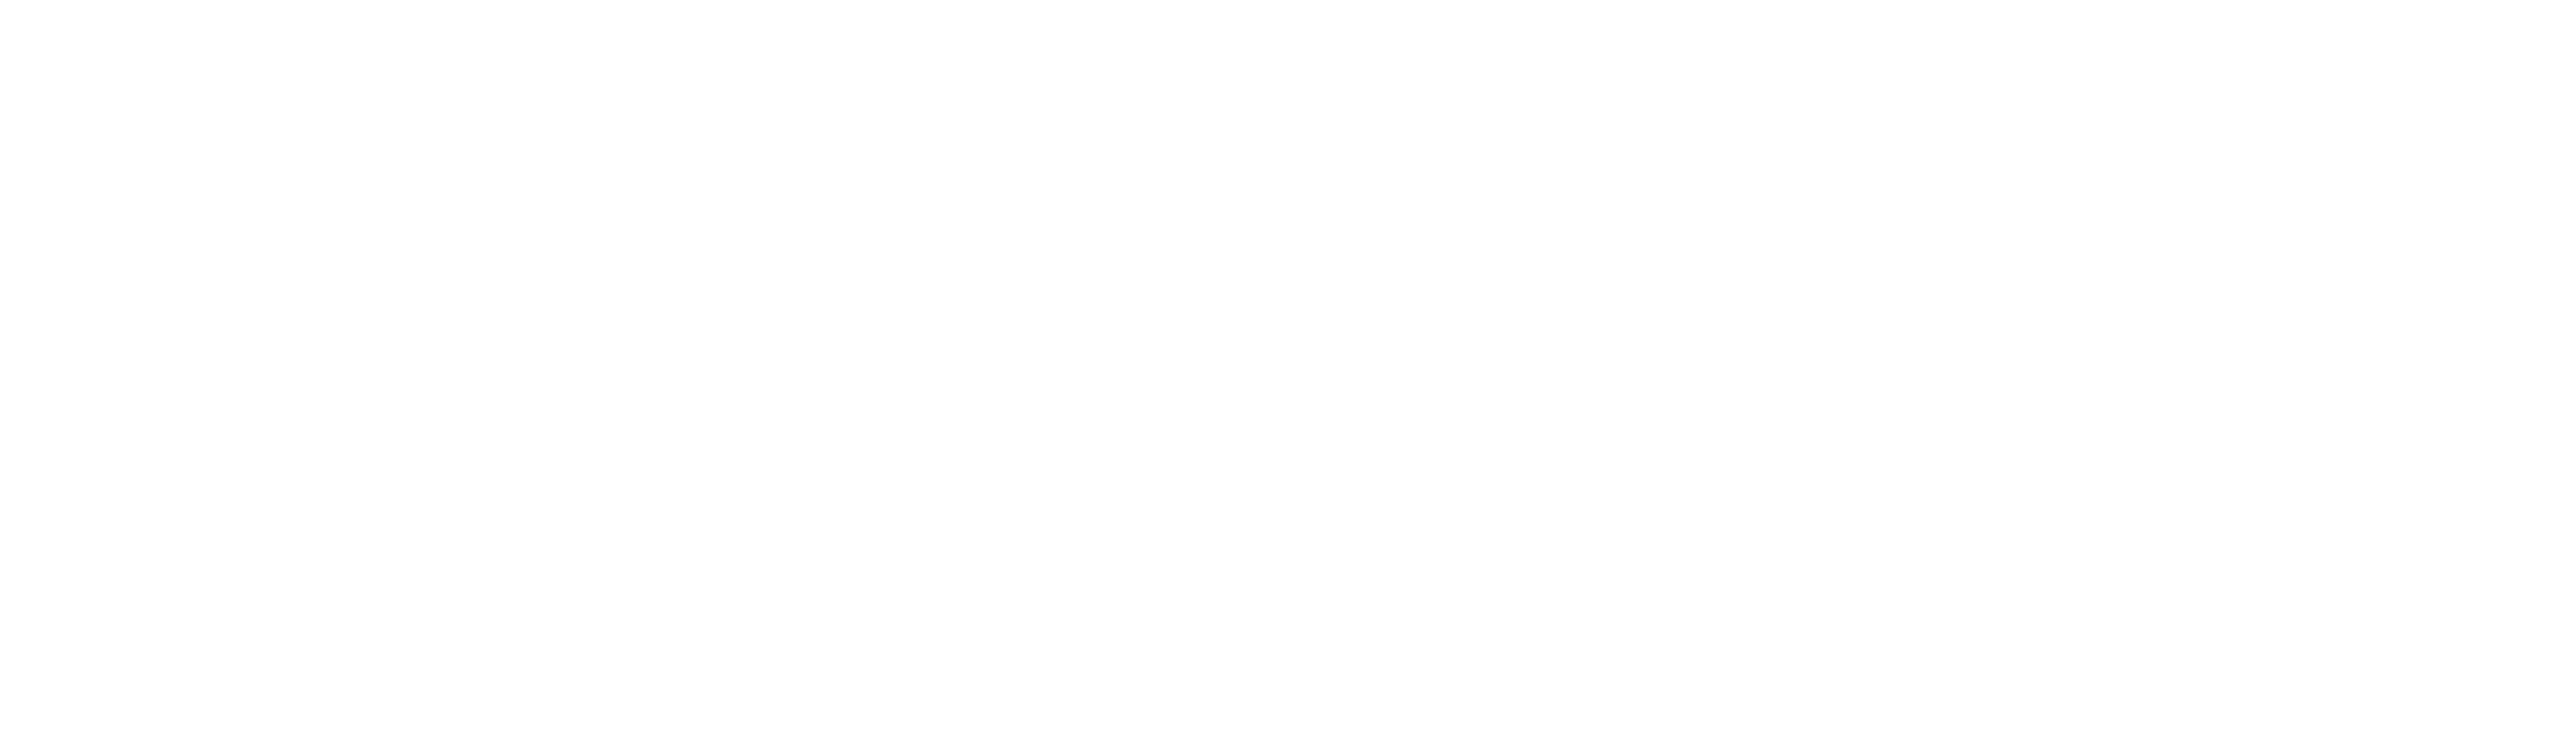 Travel Perfection